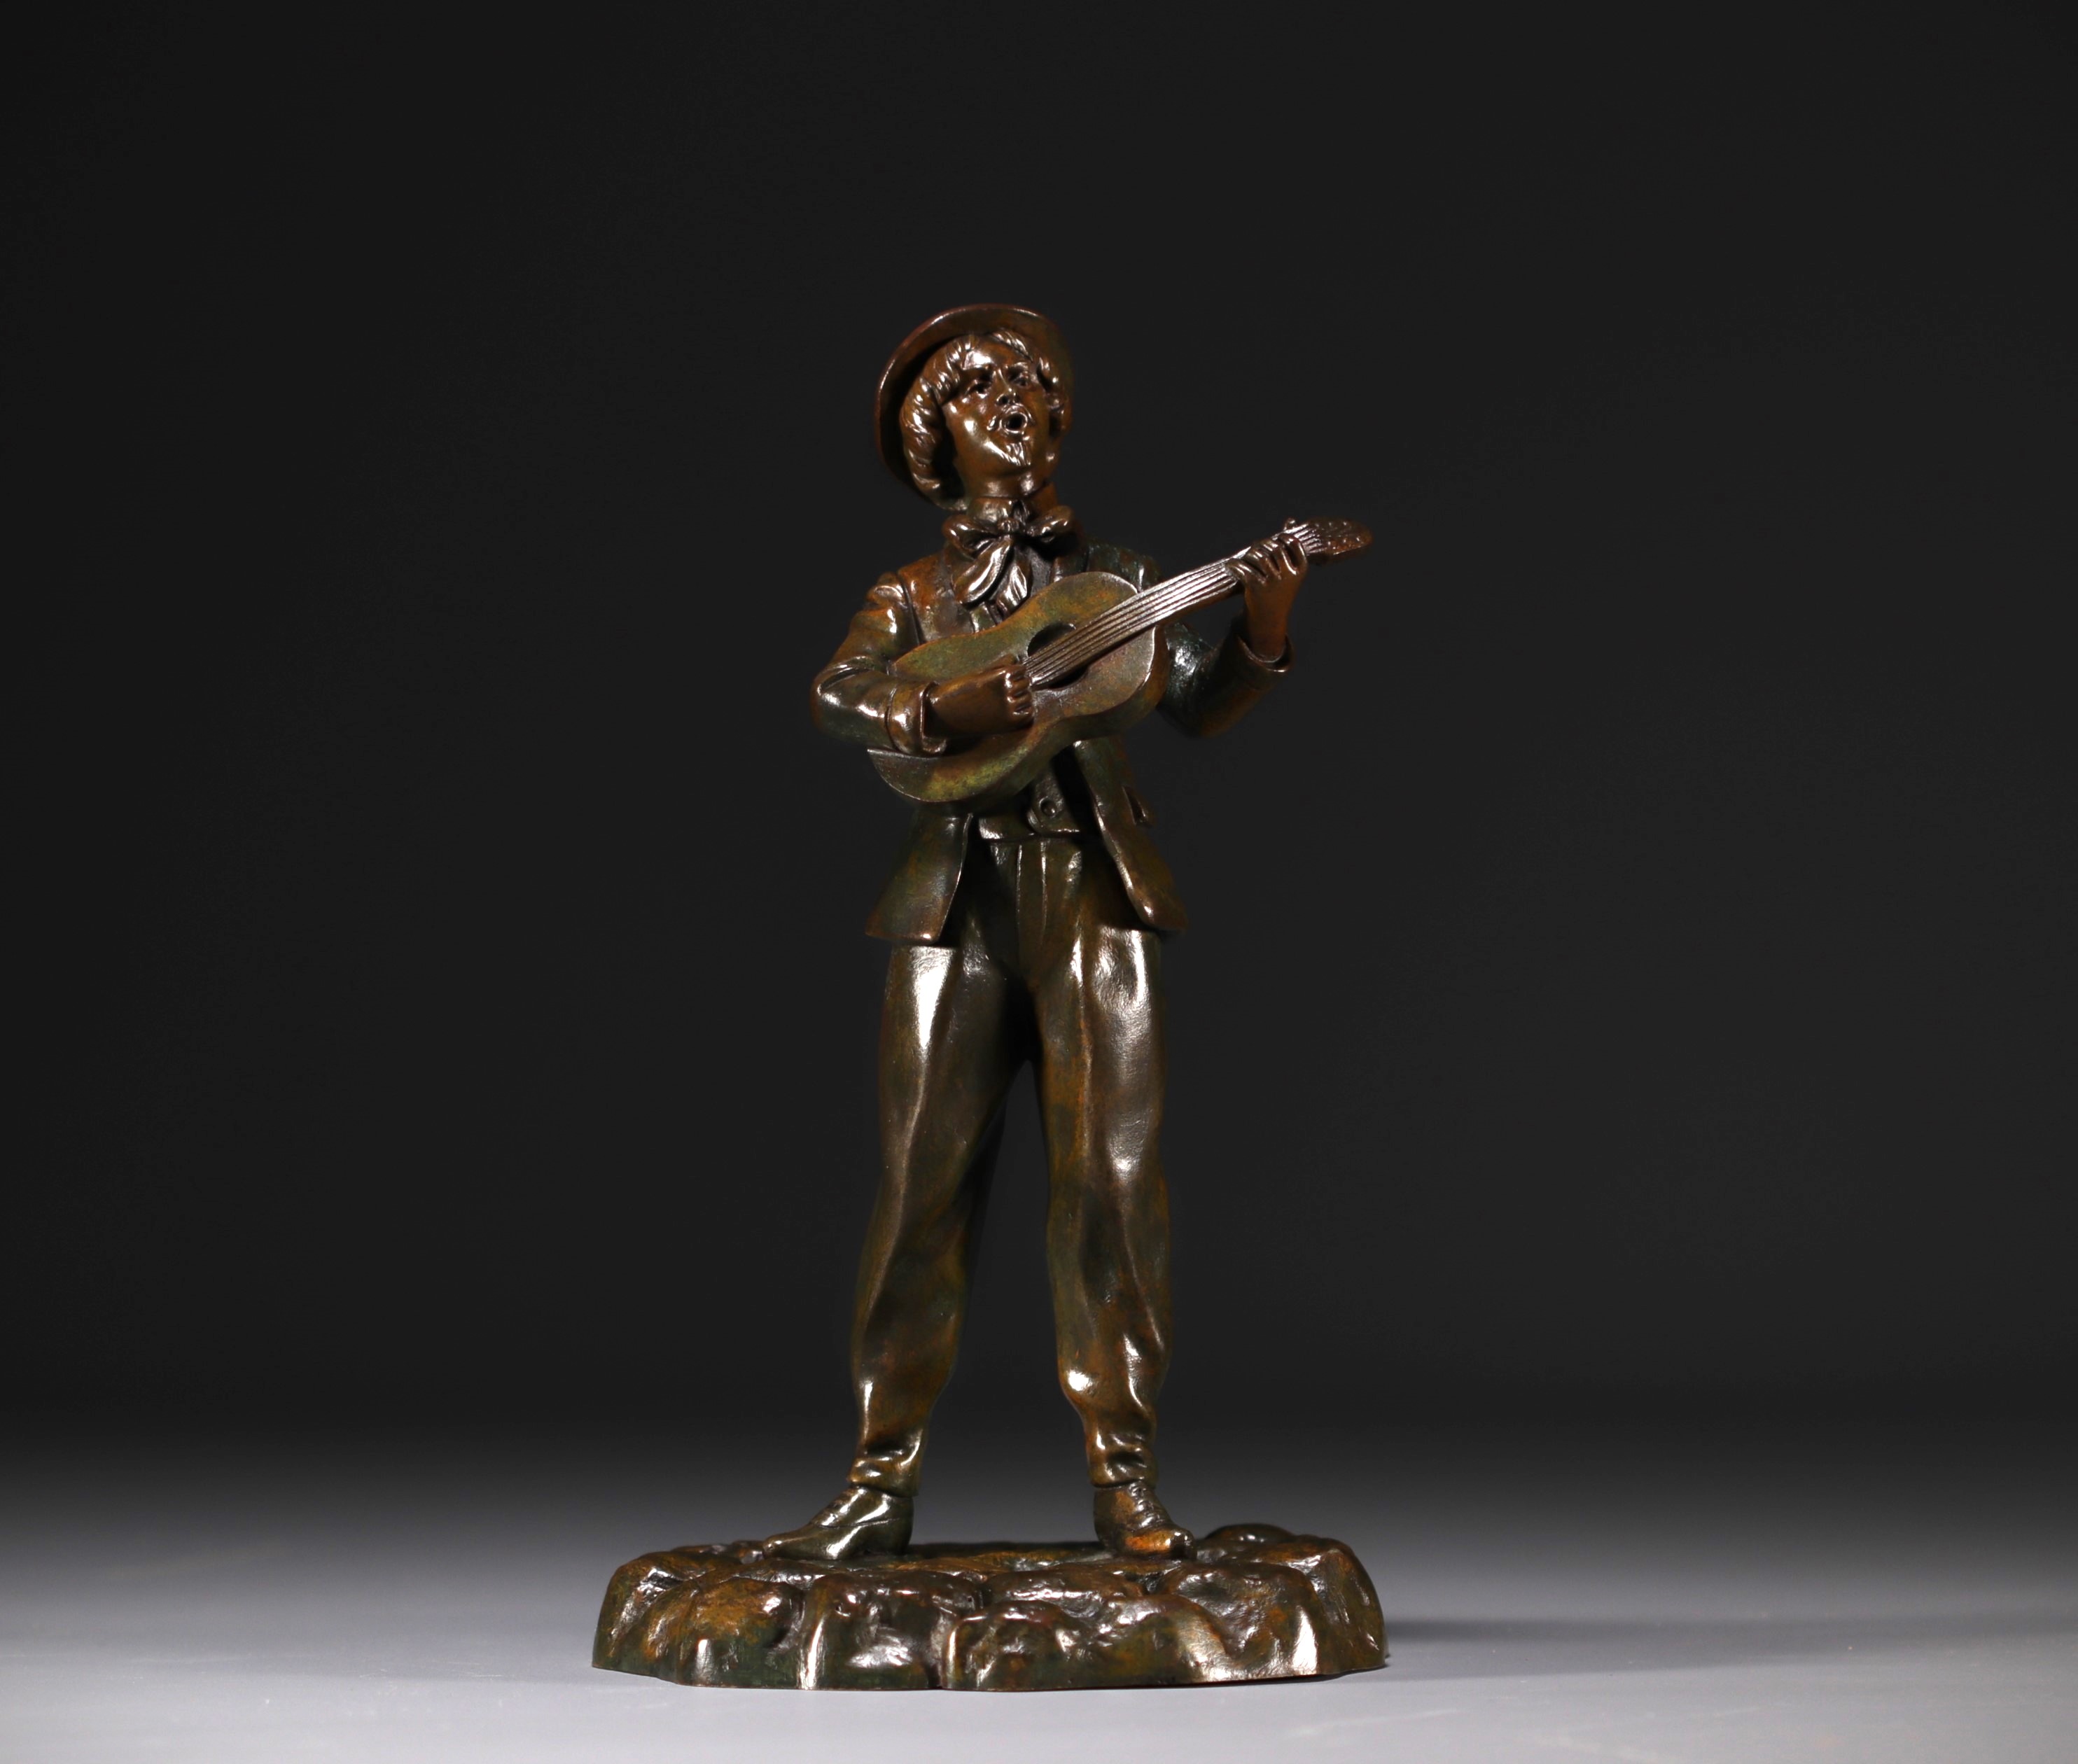 Eugene WATRIN - "Young boy with a guitar" Bronze sculpture.